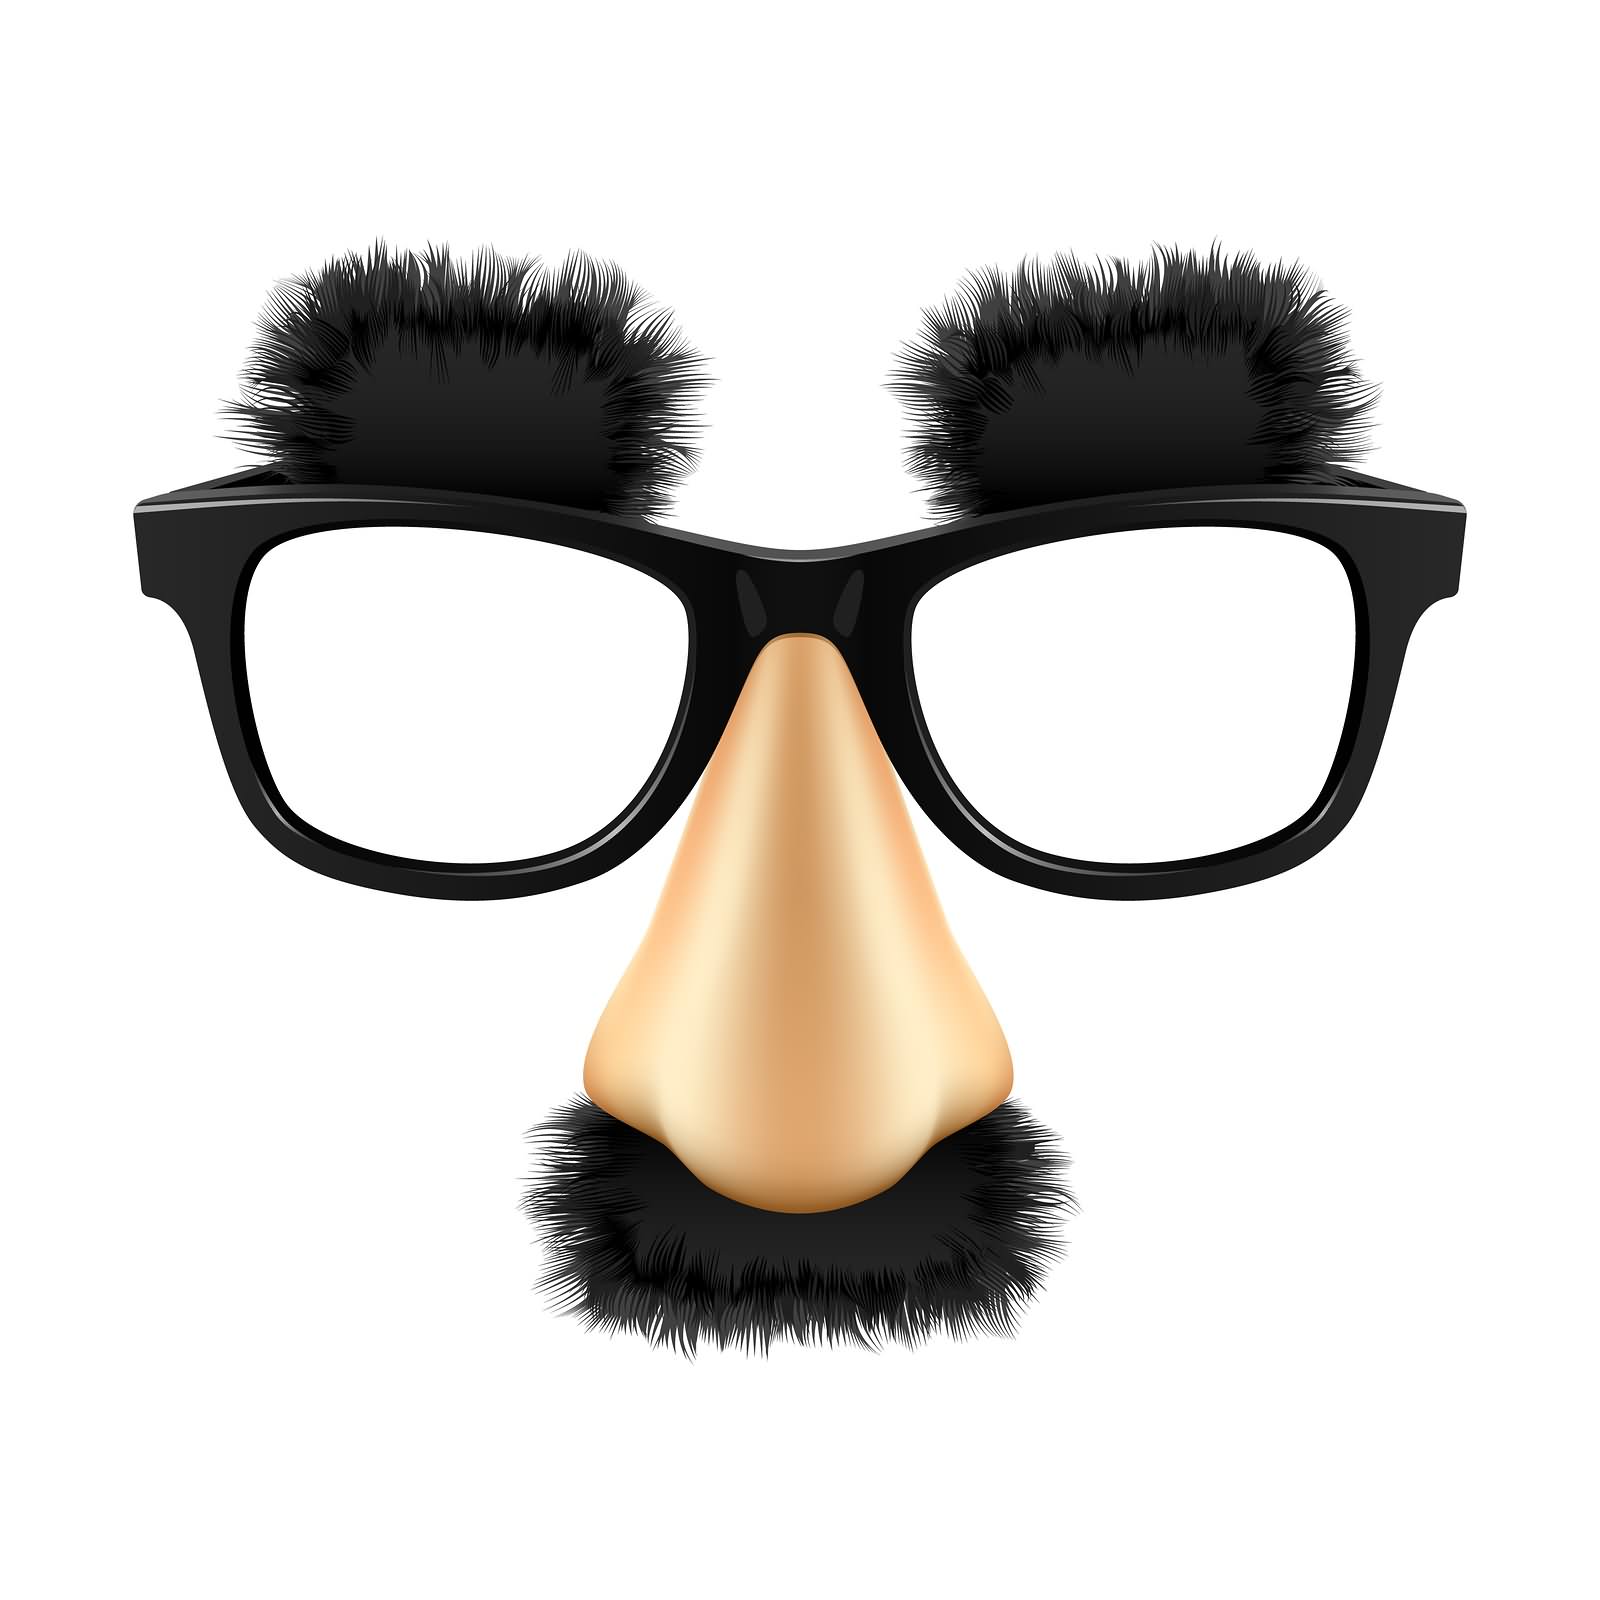 Funny Glasses Mask Image